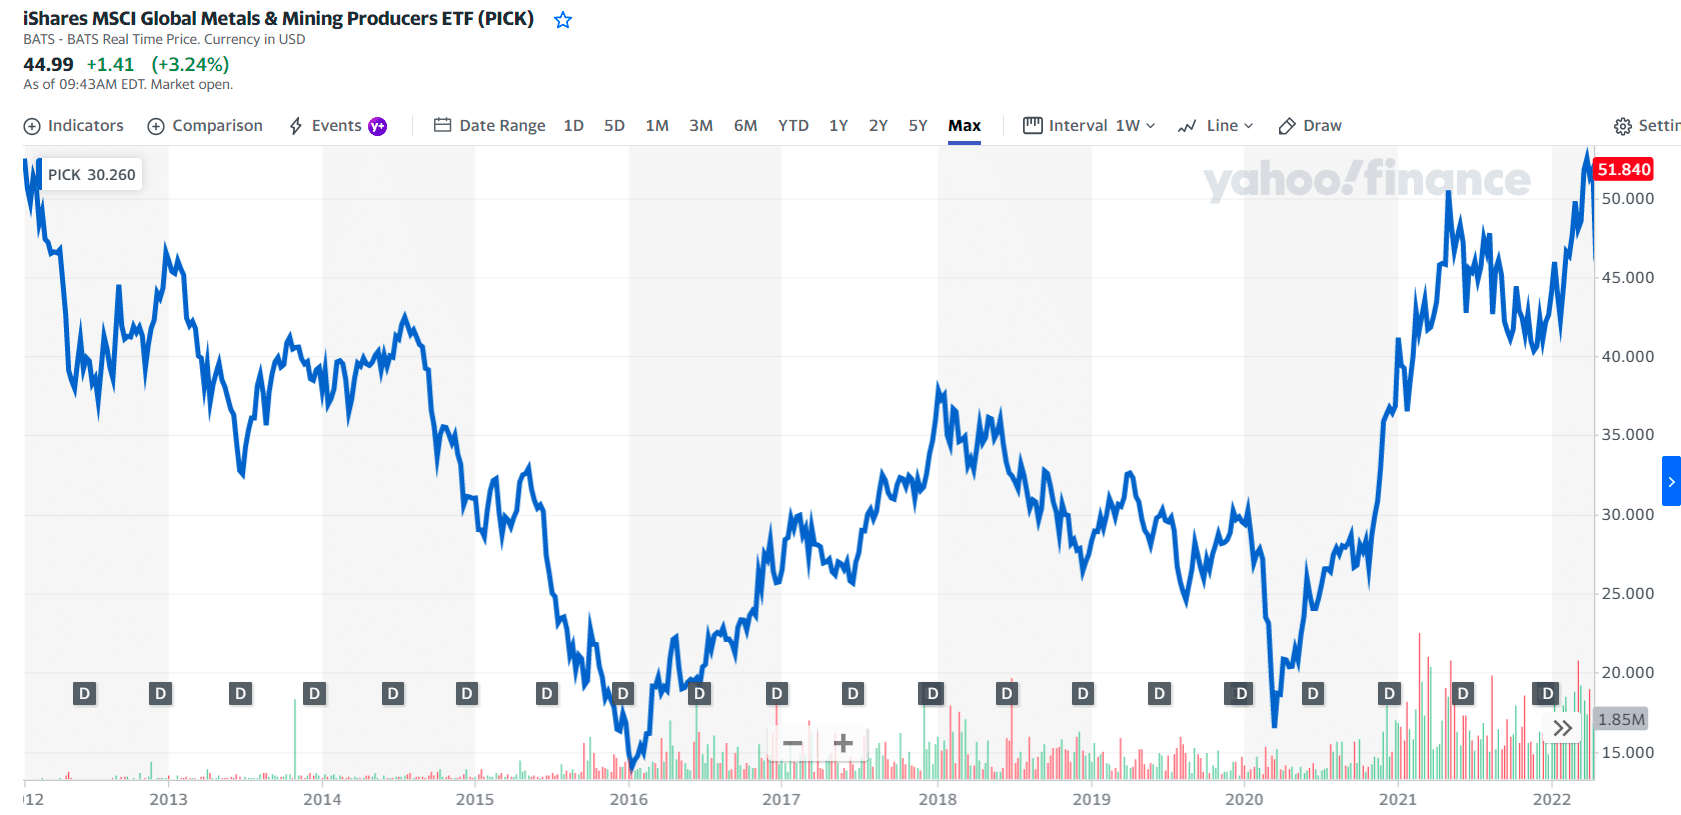 PICK price chart